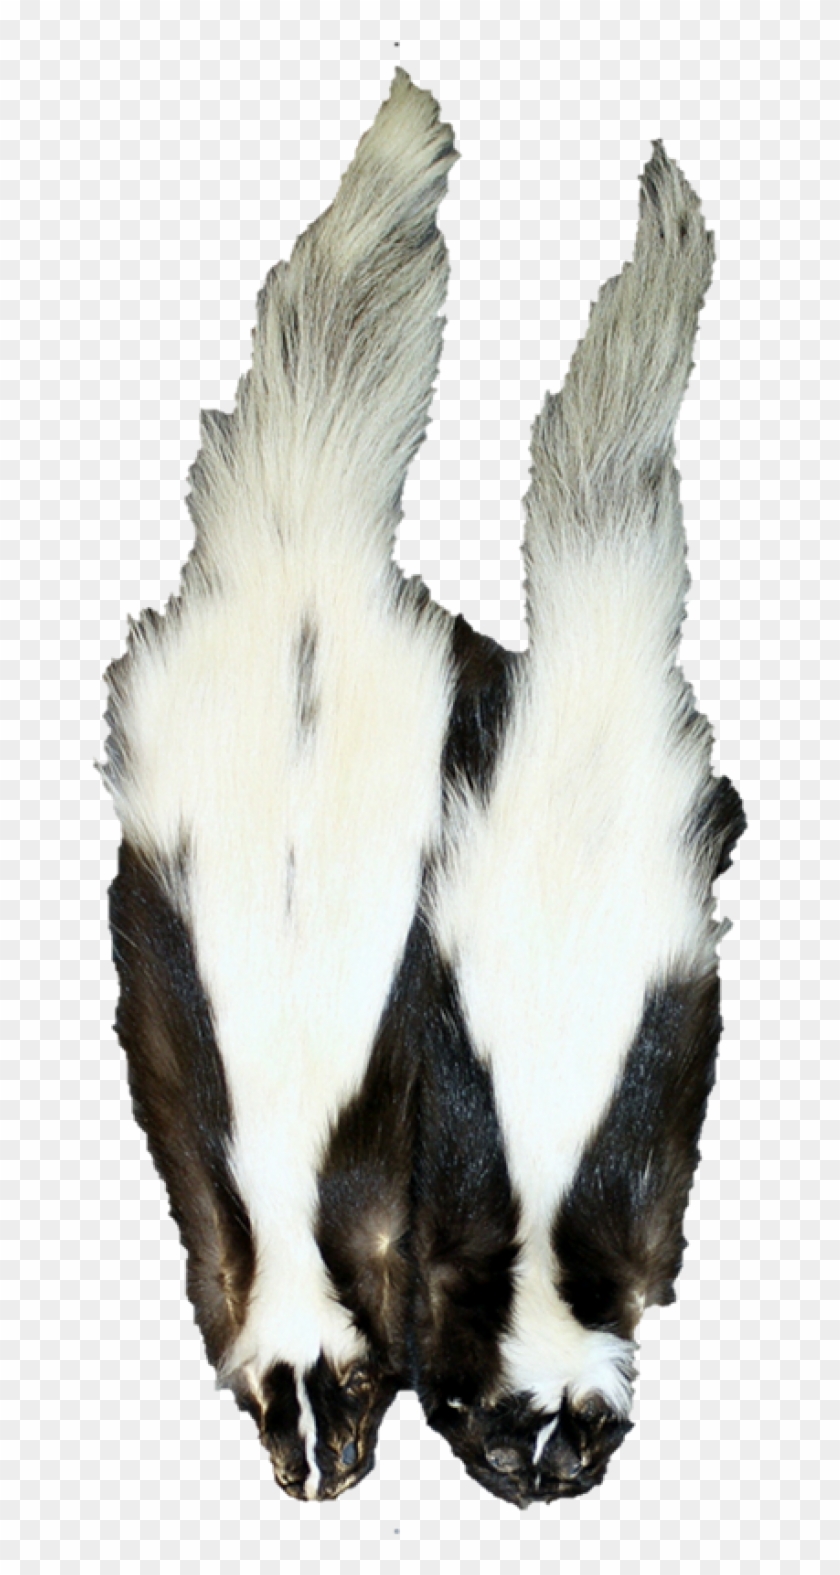 2x Wide Stripe - Hooded Skunk Clipart #1491728